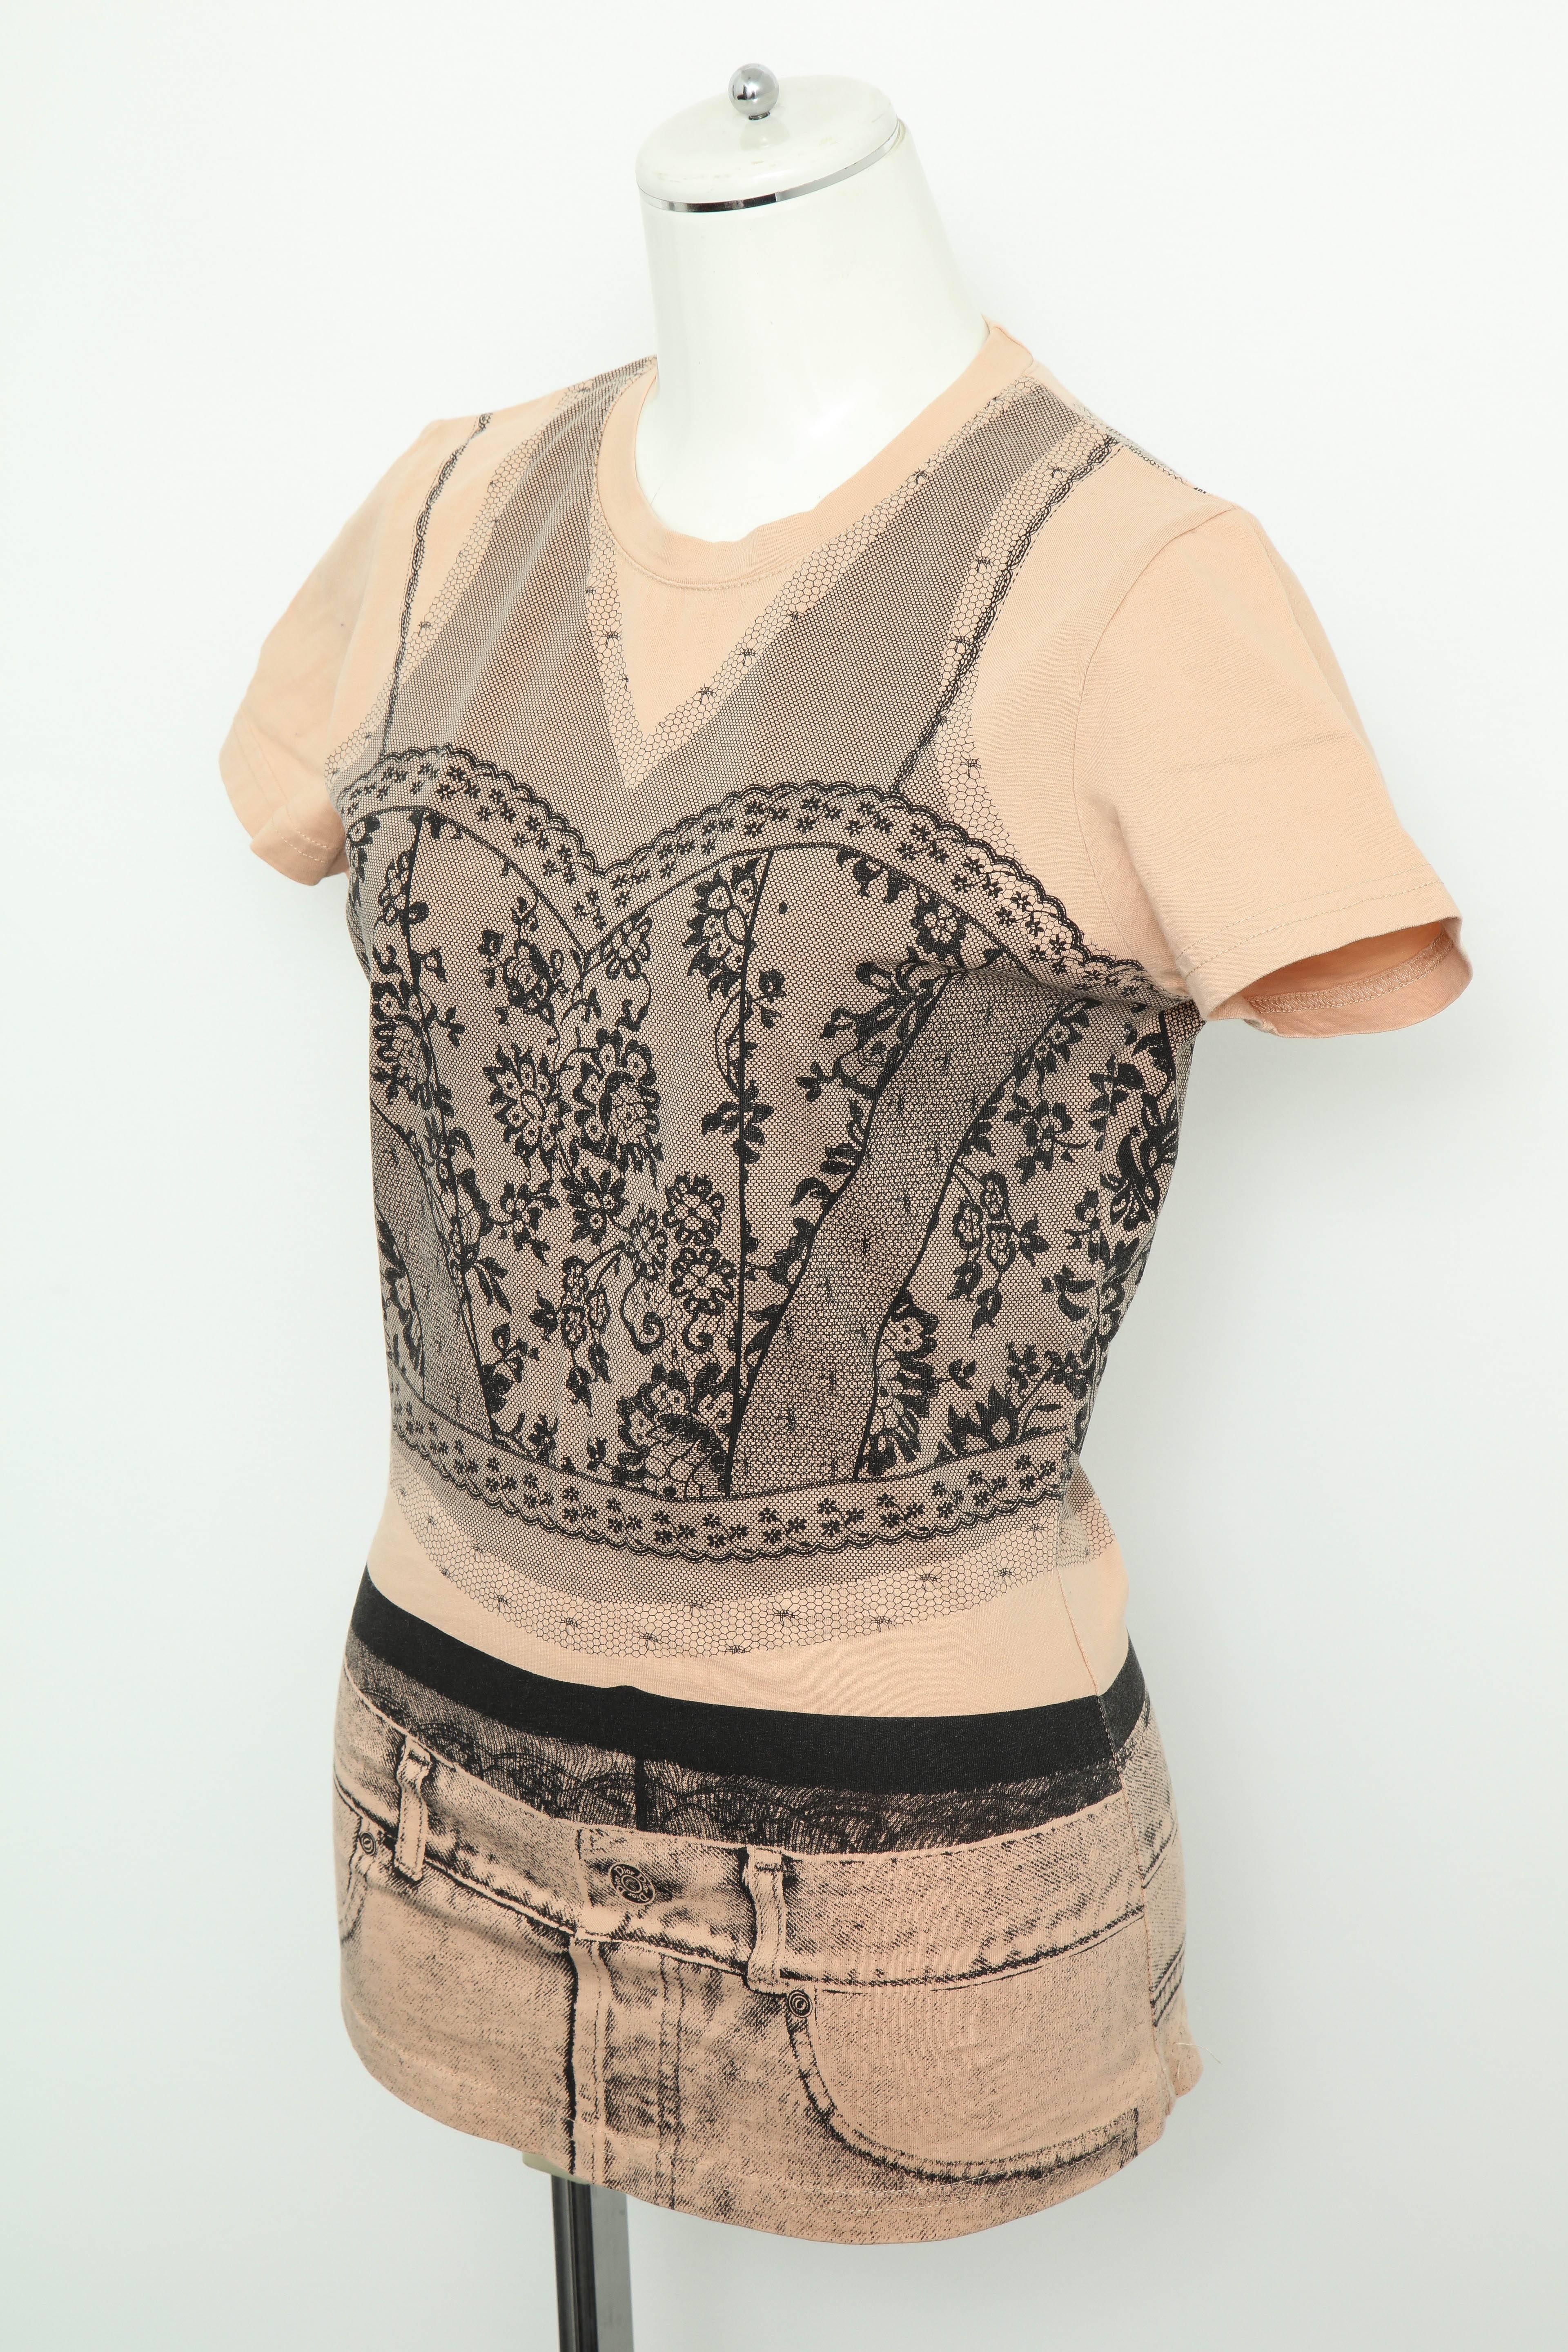 Christian Dior by John Galliano Trompe L'oeil T-shirt (Beige) im Angebot